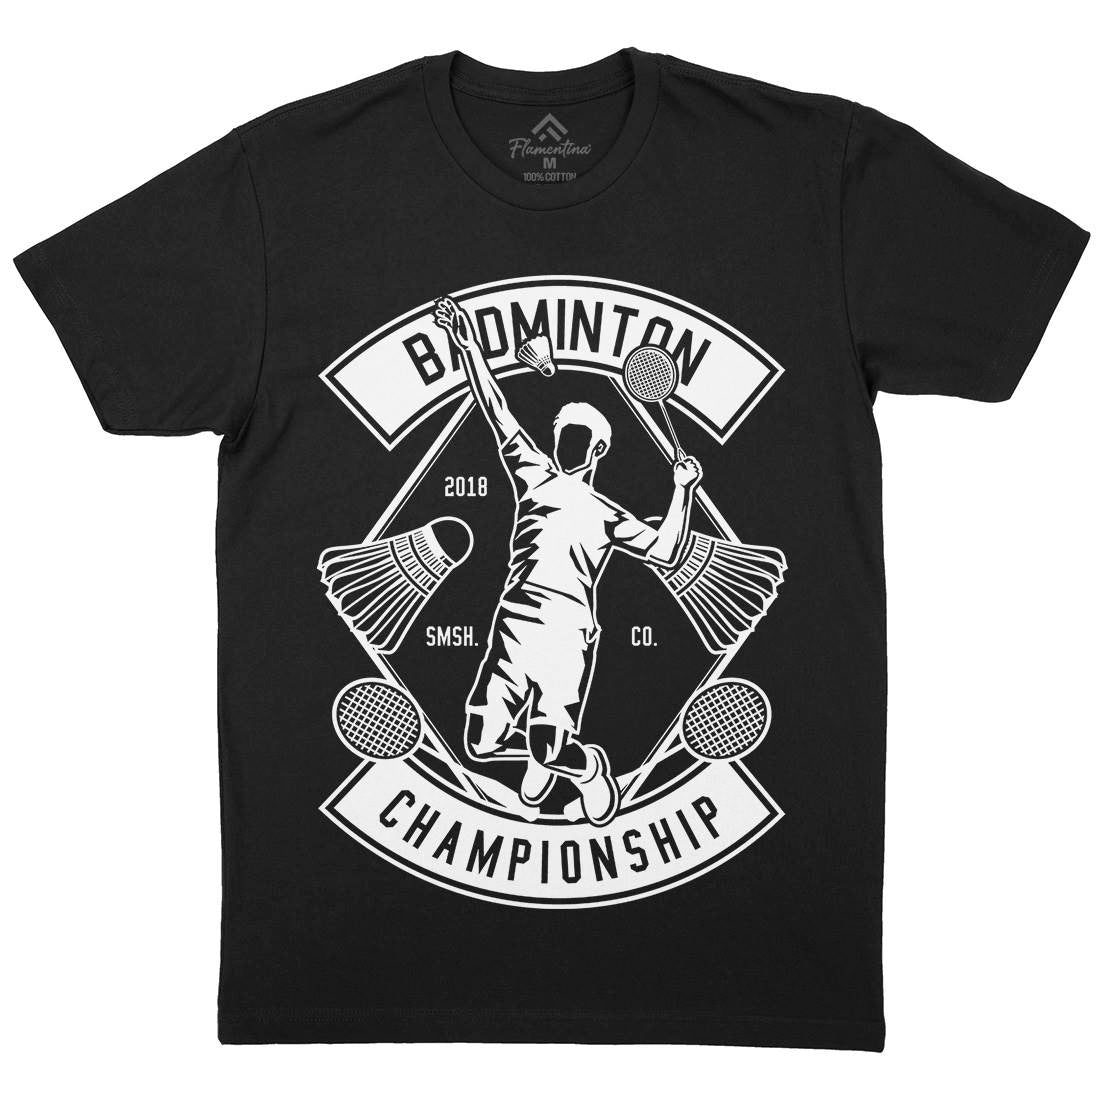 Badminton Championship Mens Organic Crew Neck T-Shirt Sport B486